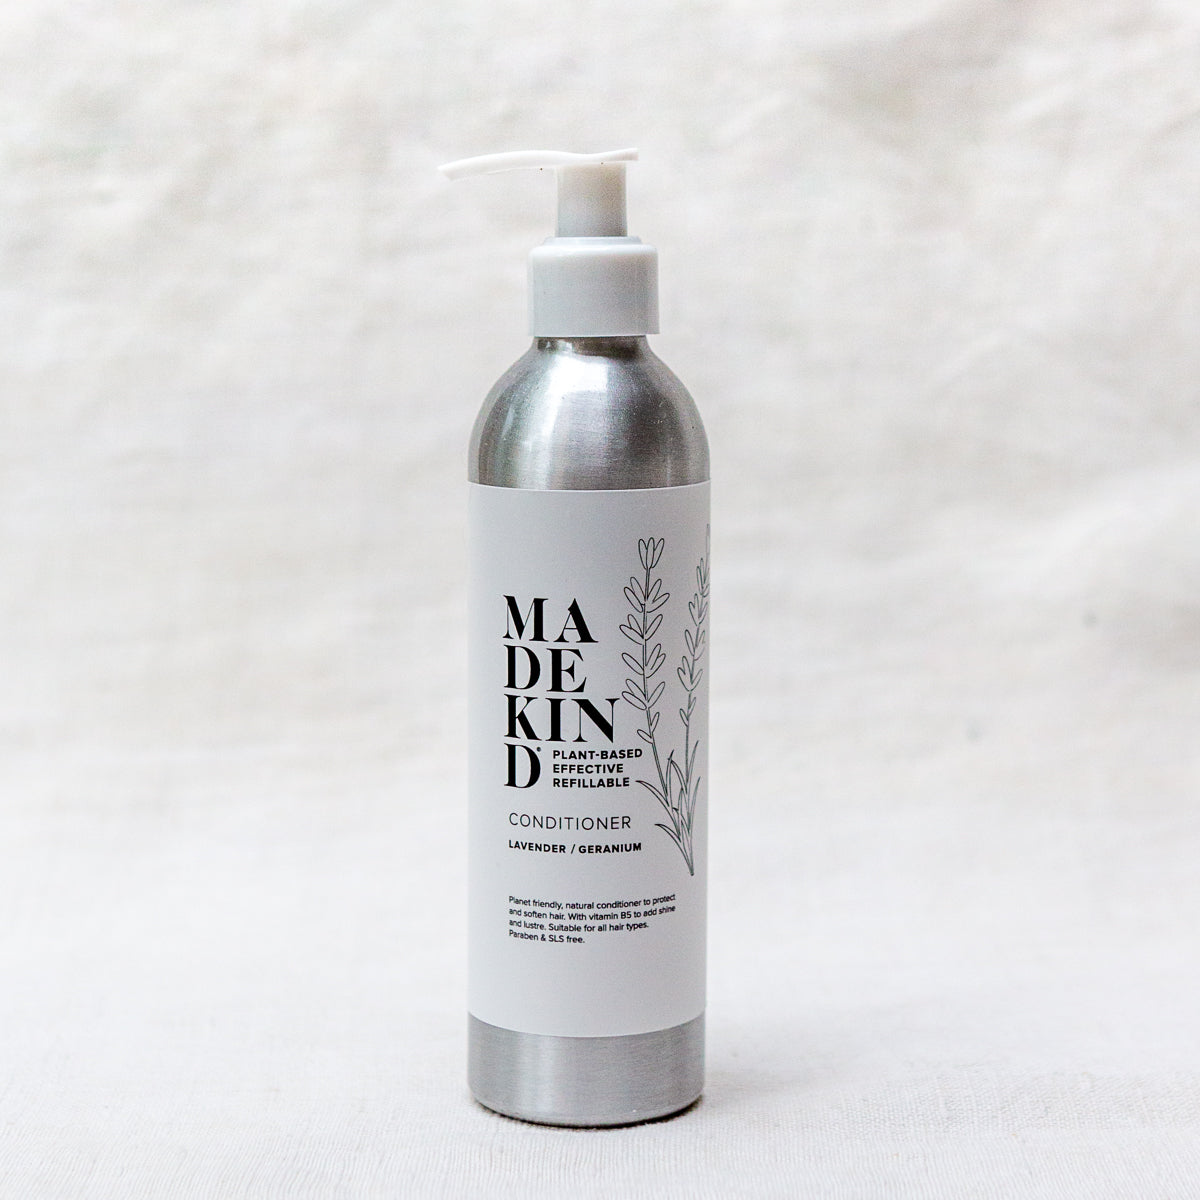 madekind natural hair shampoo 250ml in aluminium bottle with lavender and geranium essential oils